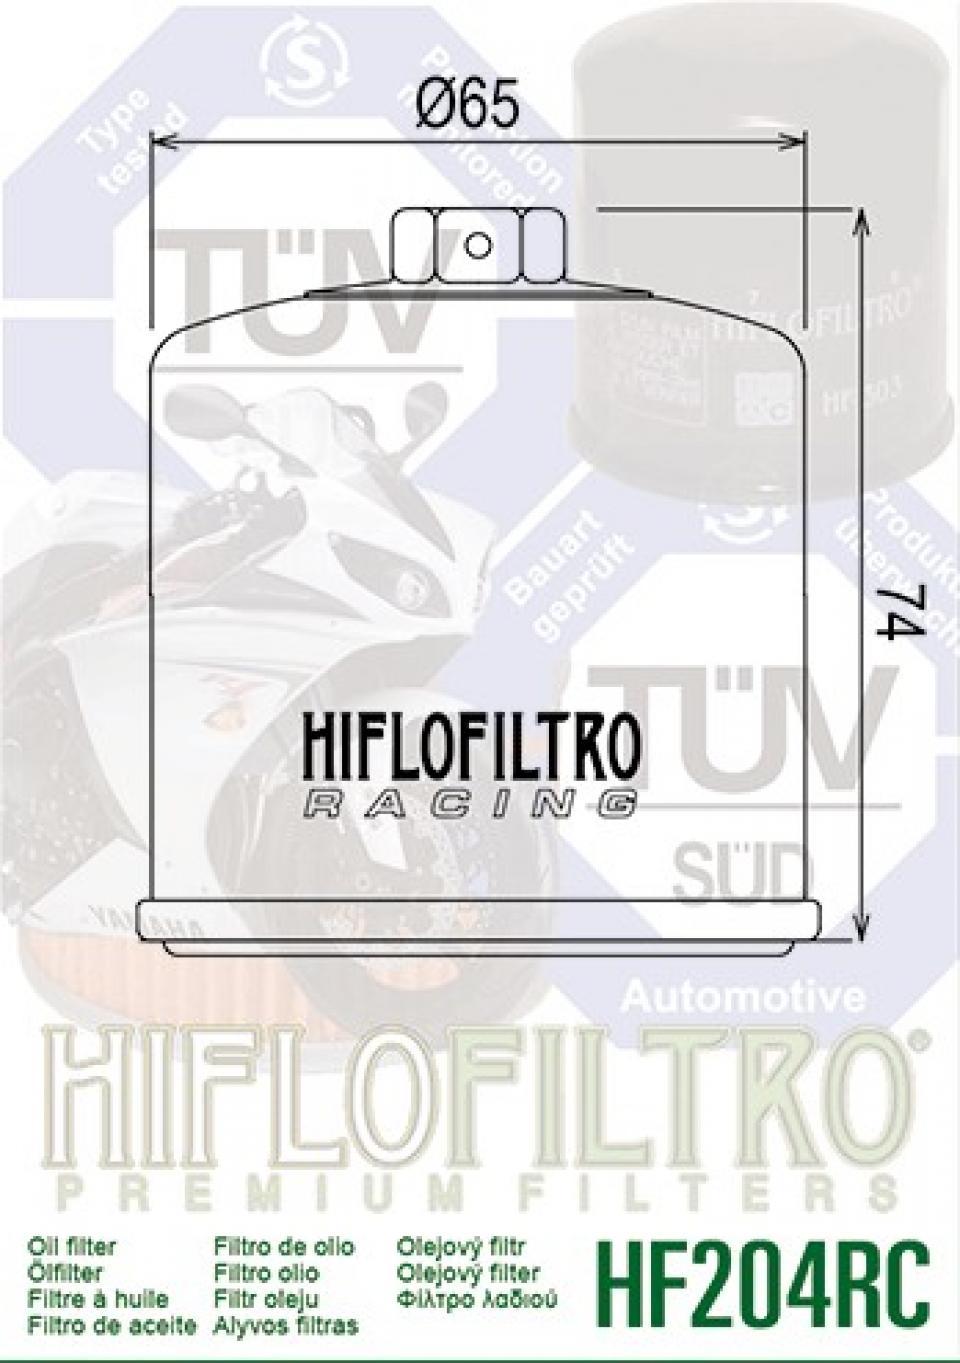 Filtre à huile Hiflofiltro pour Moto Triumph 675 Daytona 2005 à 2015 HF204RC / T1210444 Neuf